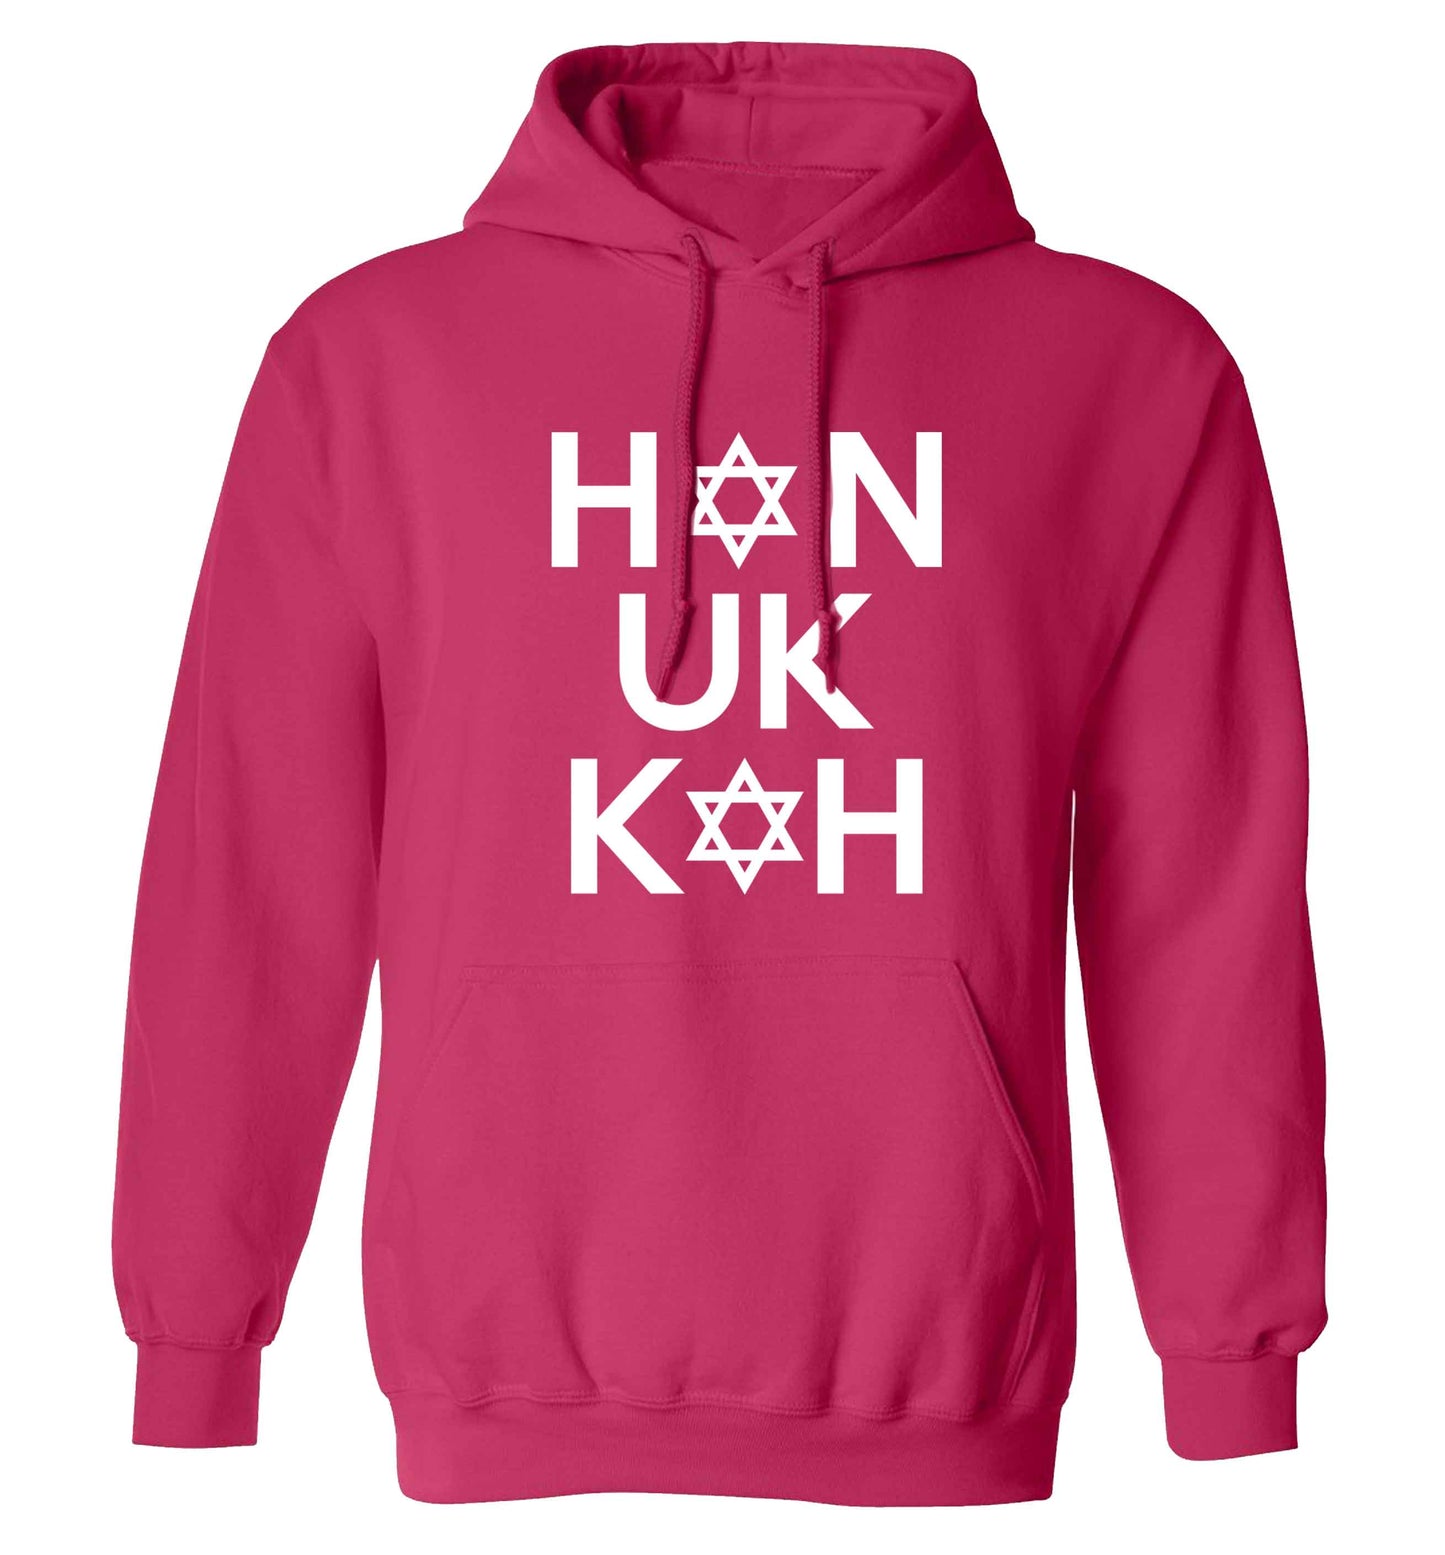 Han uk kah  Hanukkah star of david adults unisex pink hoodie 2XL